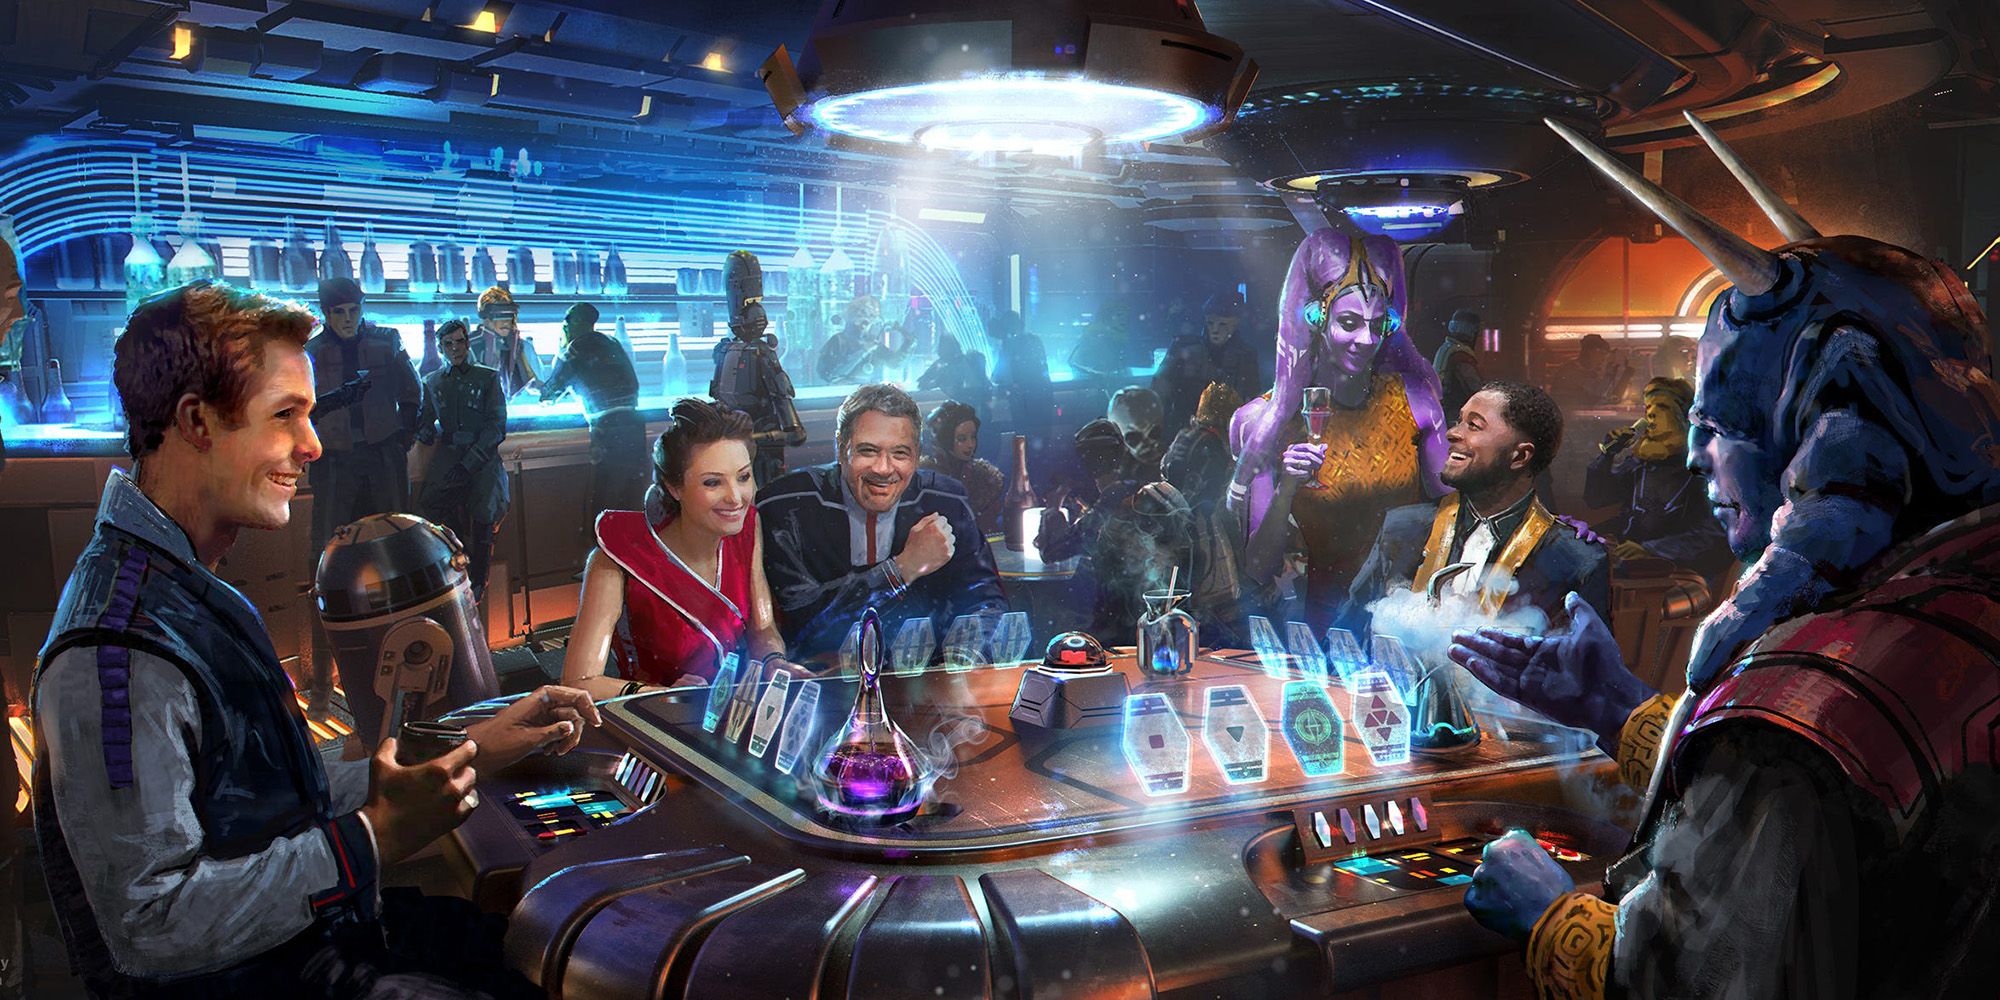 Blue Shrimp de Disney's Star Wars Hotel tardó 6 meses en crearse